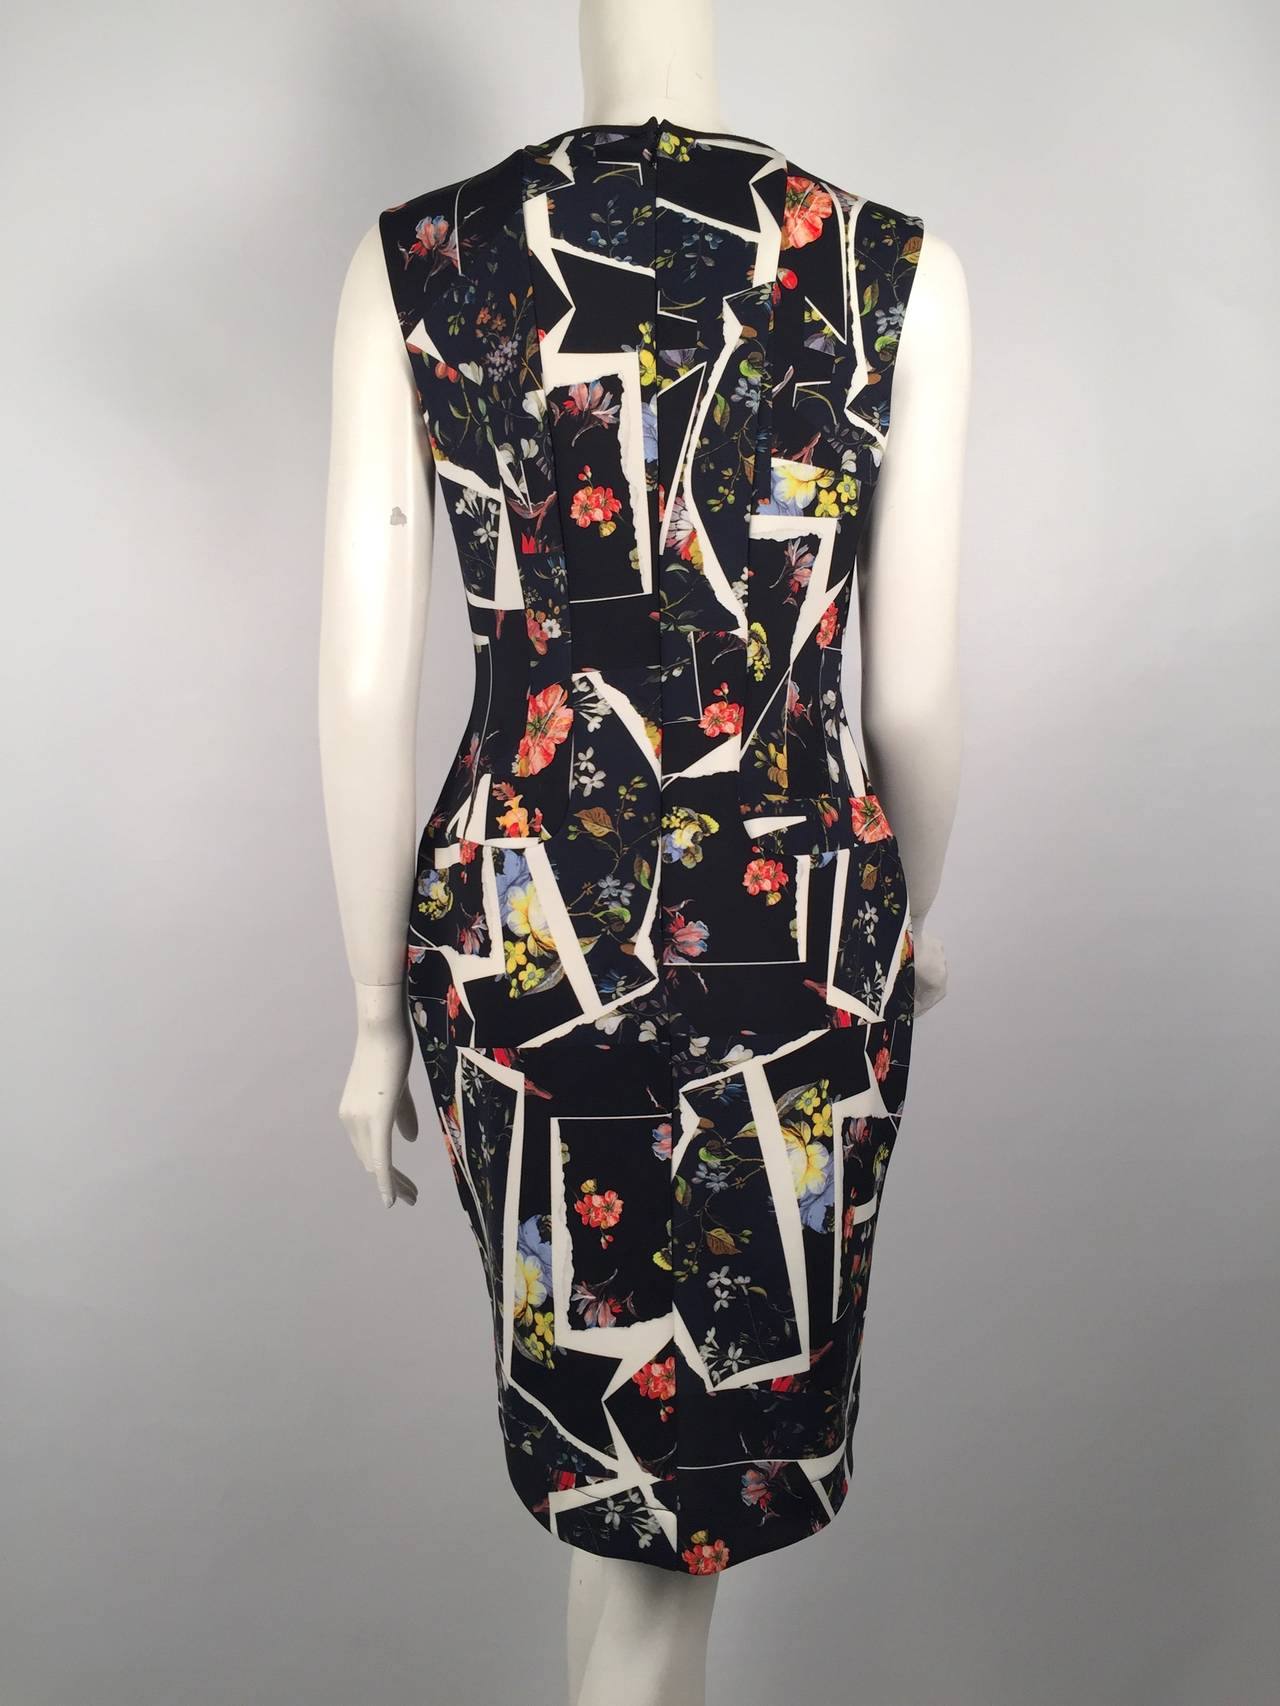 Erdem Black Multicolor Print Sheath Dress is a wonderful alternative to the LBD...or 